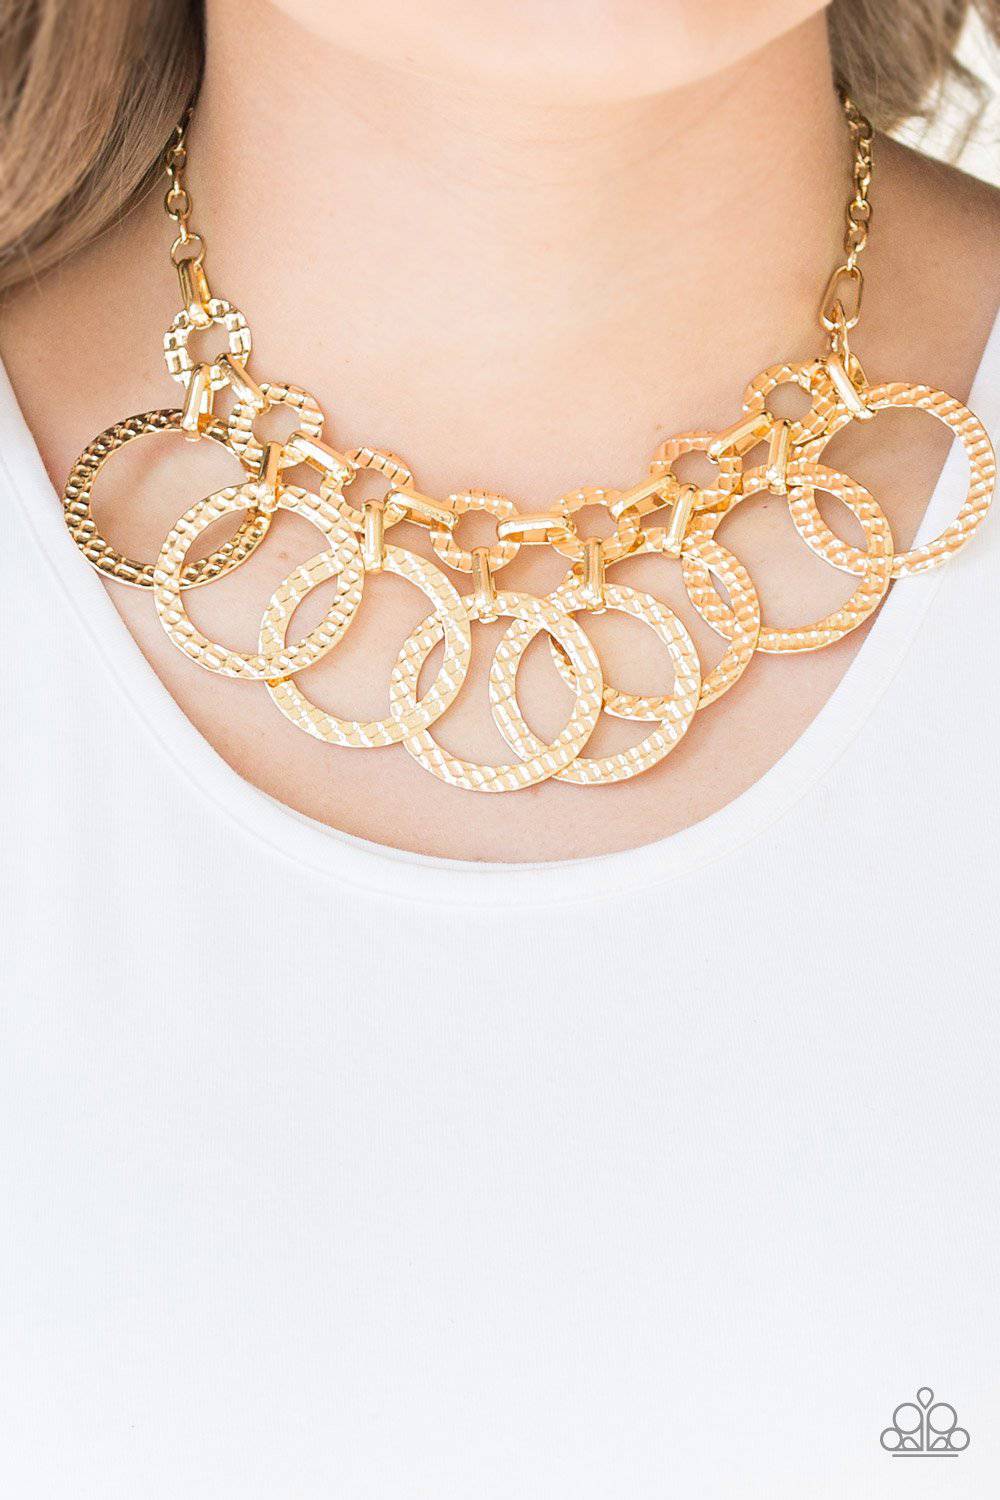 Jammin Jungle - Gold Necklace - Paparazzi Accessories - GlaMarous Titi Jewels